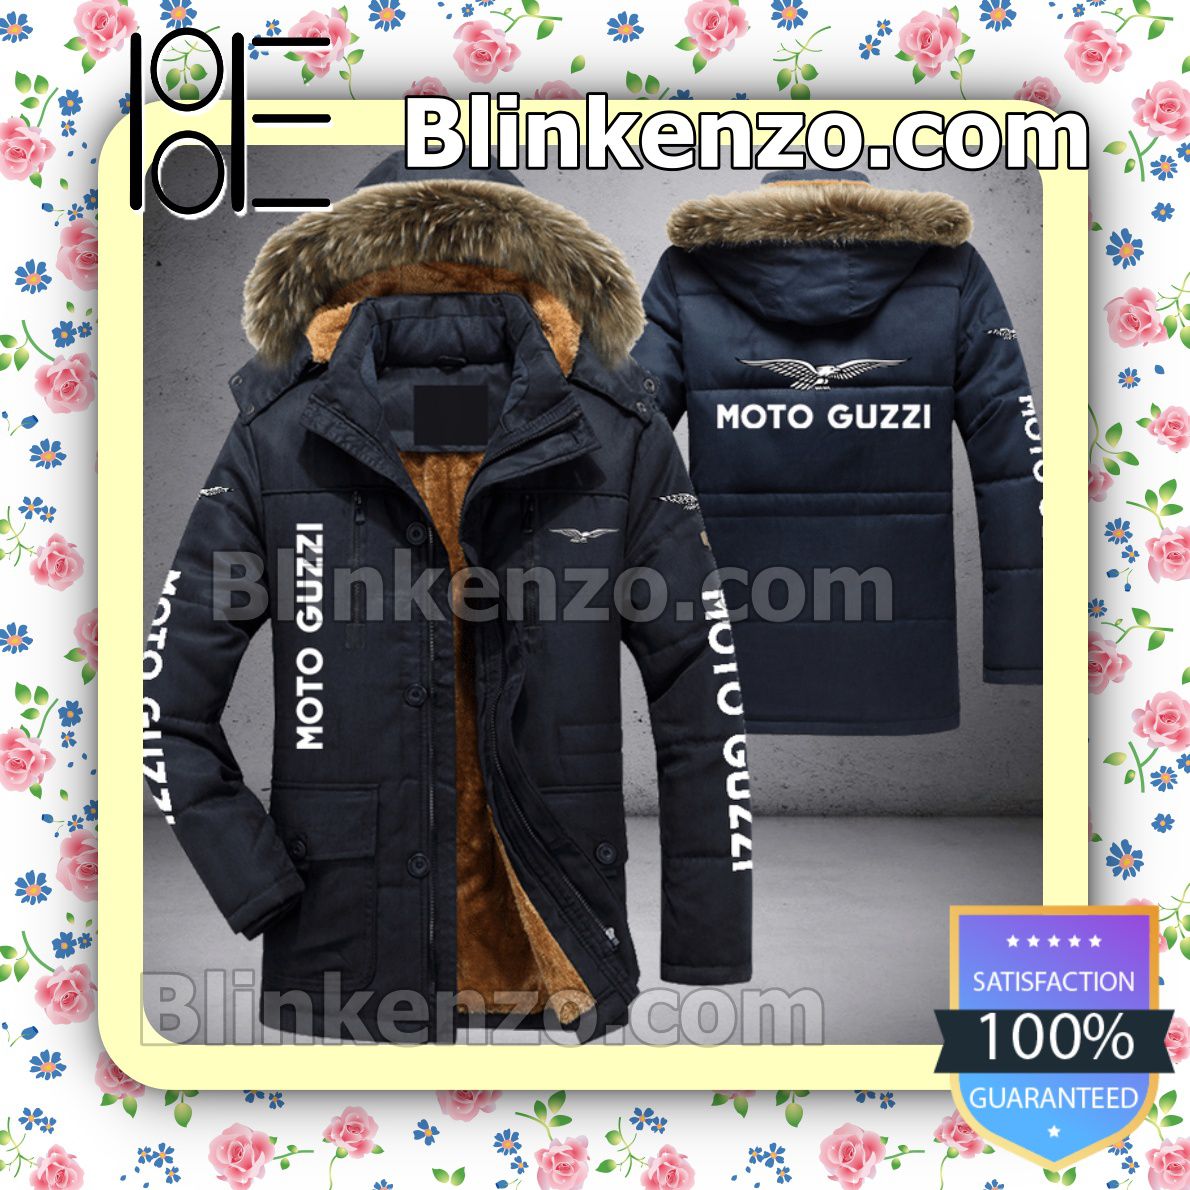 Print On Demand Moto Guzzi Men Puffer Jacket